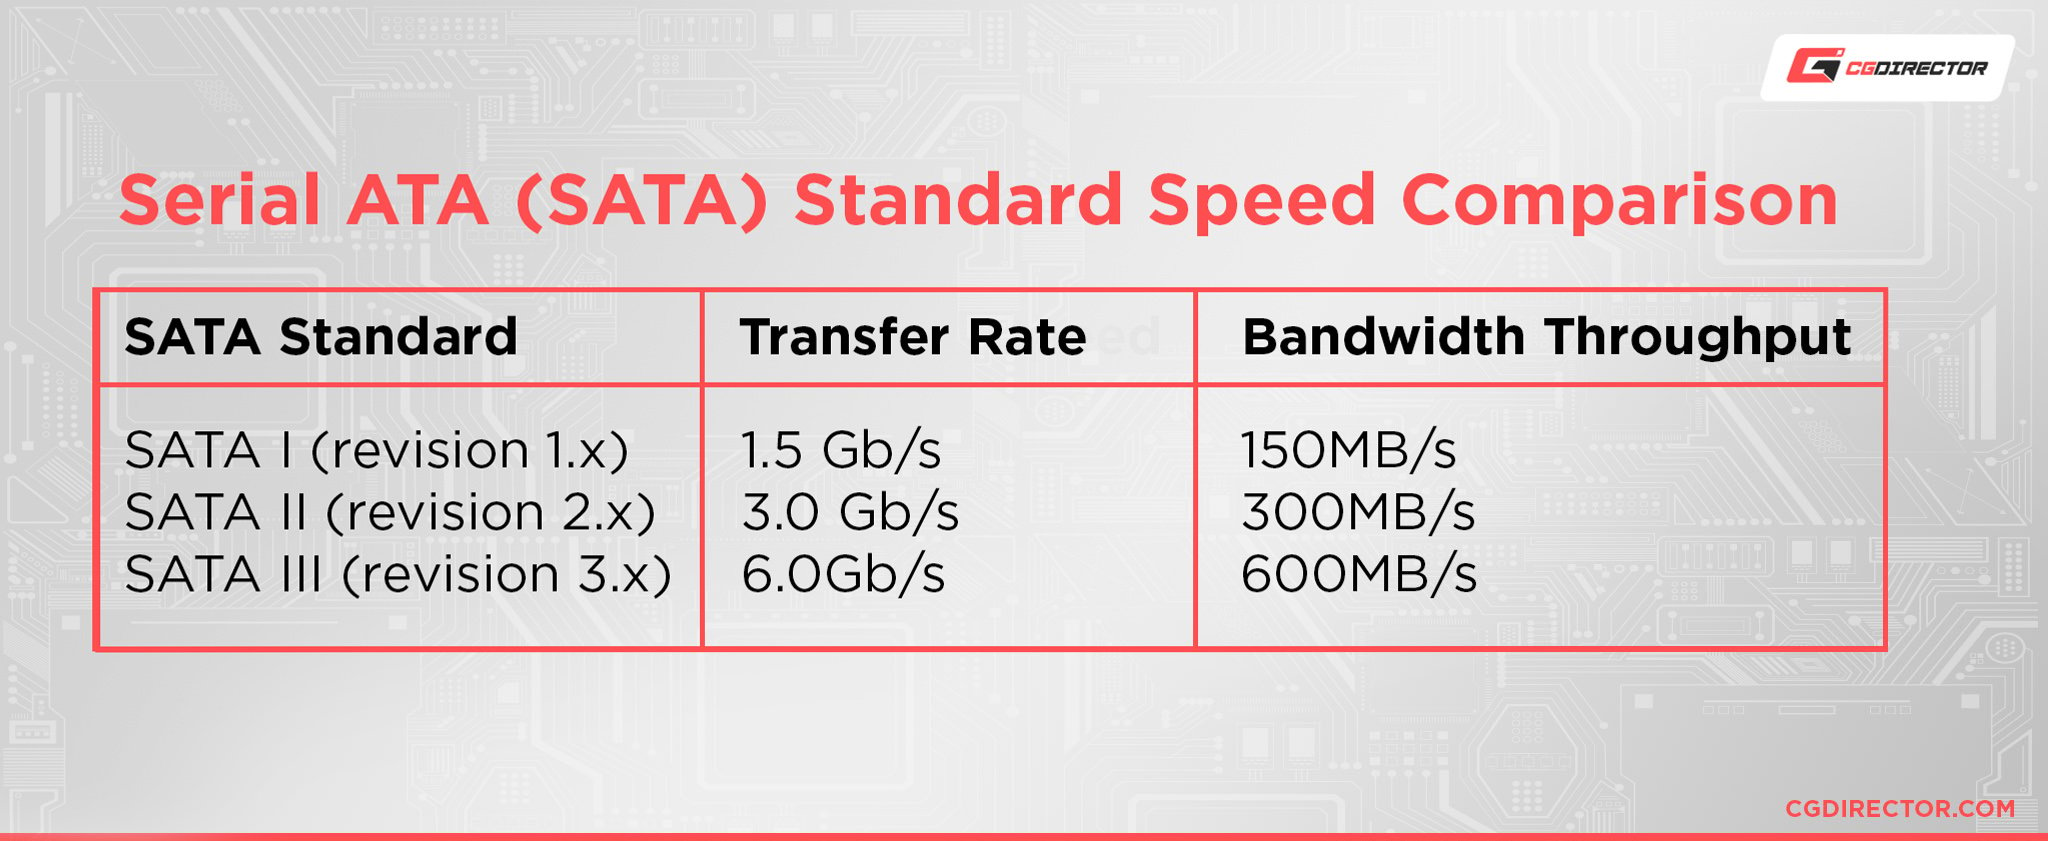 Serial ATA (SATA) Standard Speed Comparison